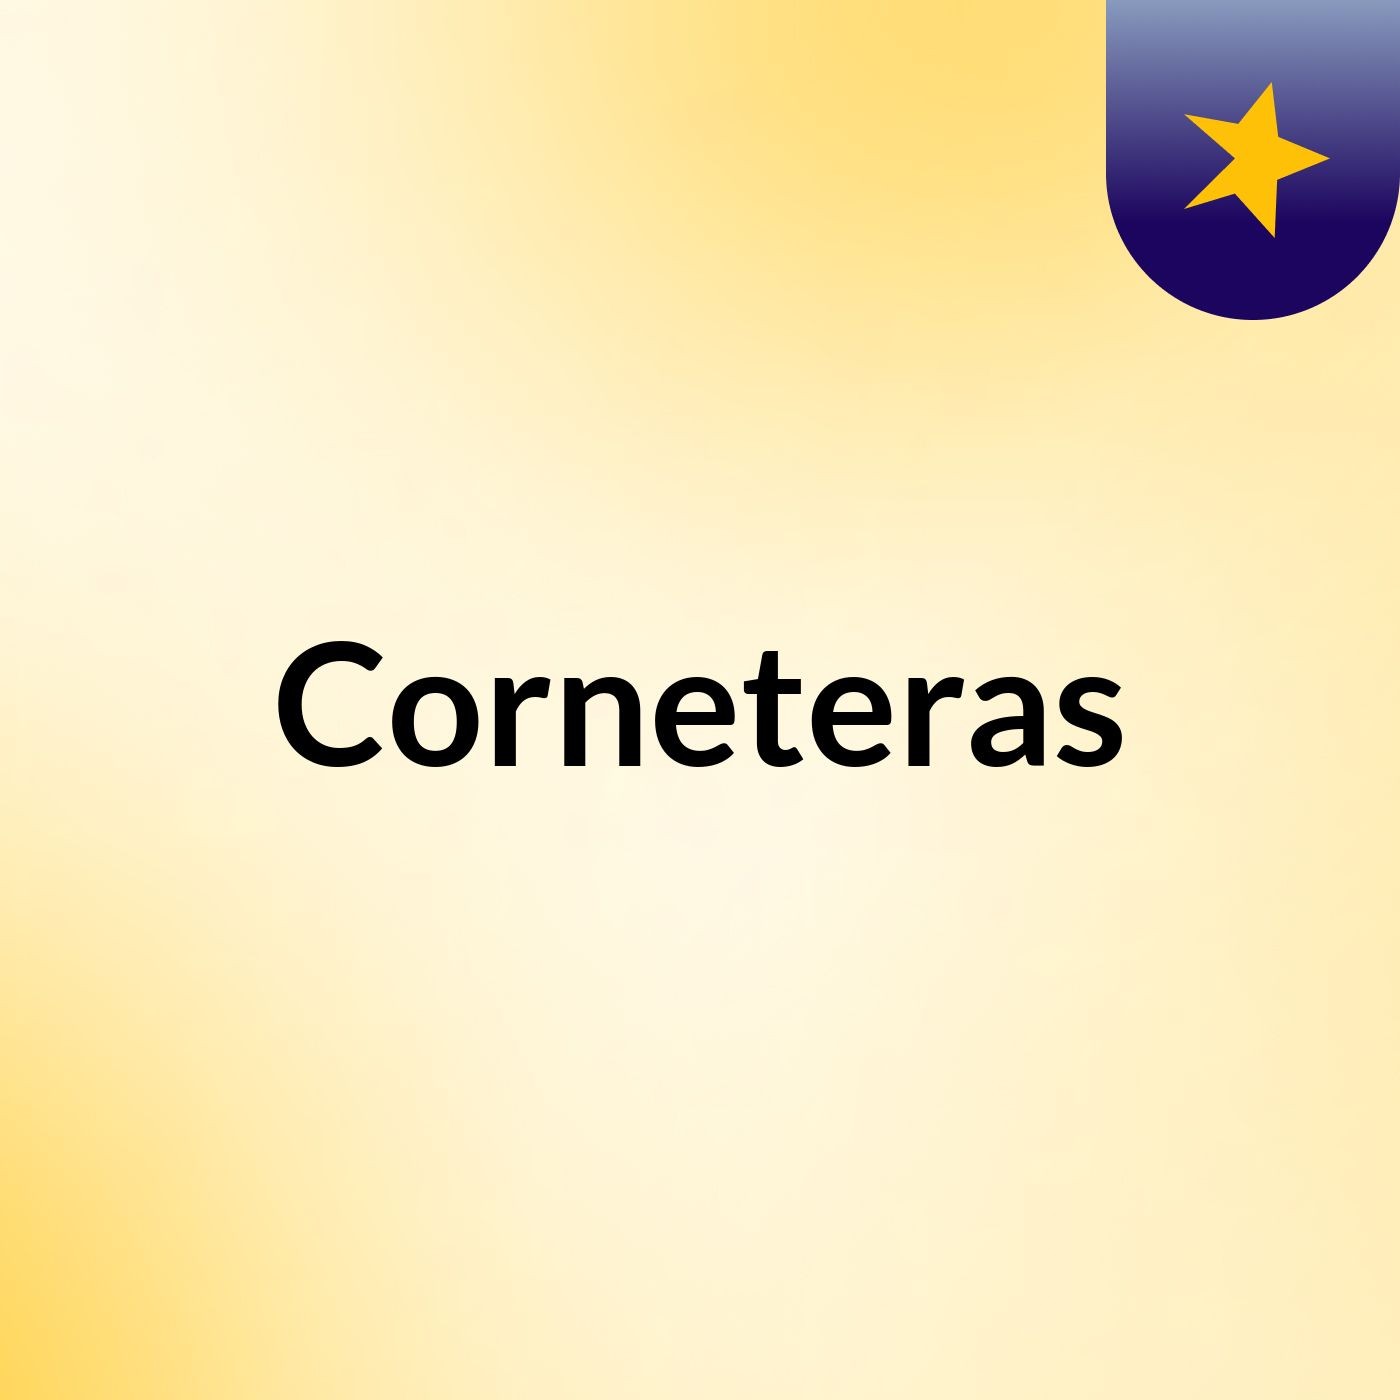 Corneteras